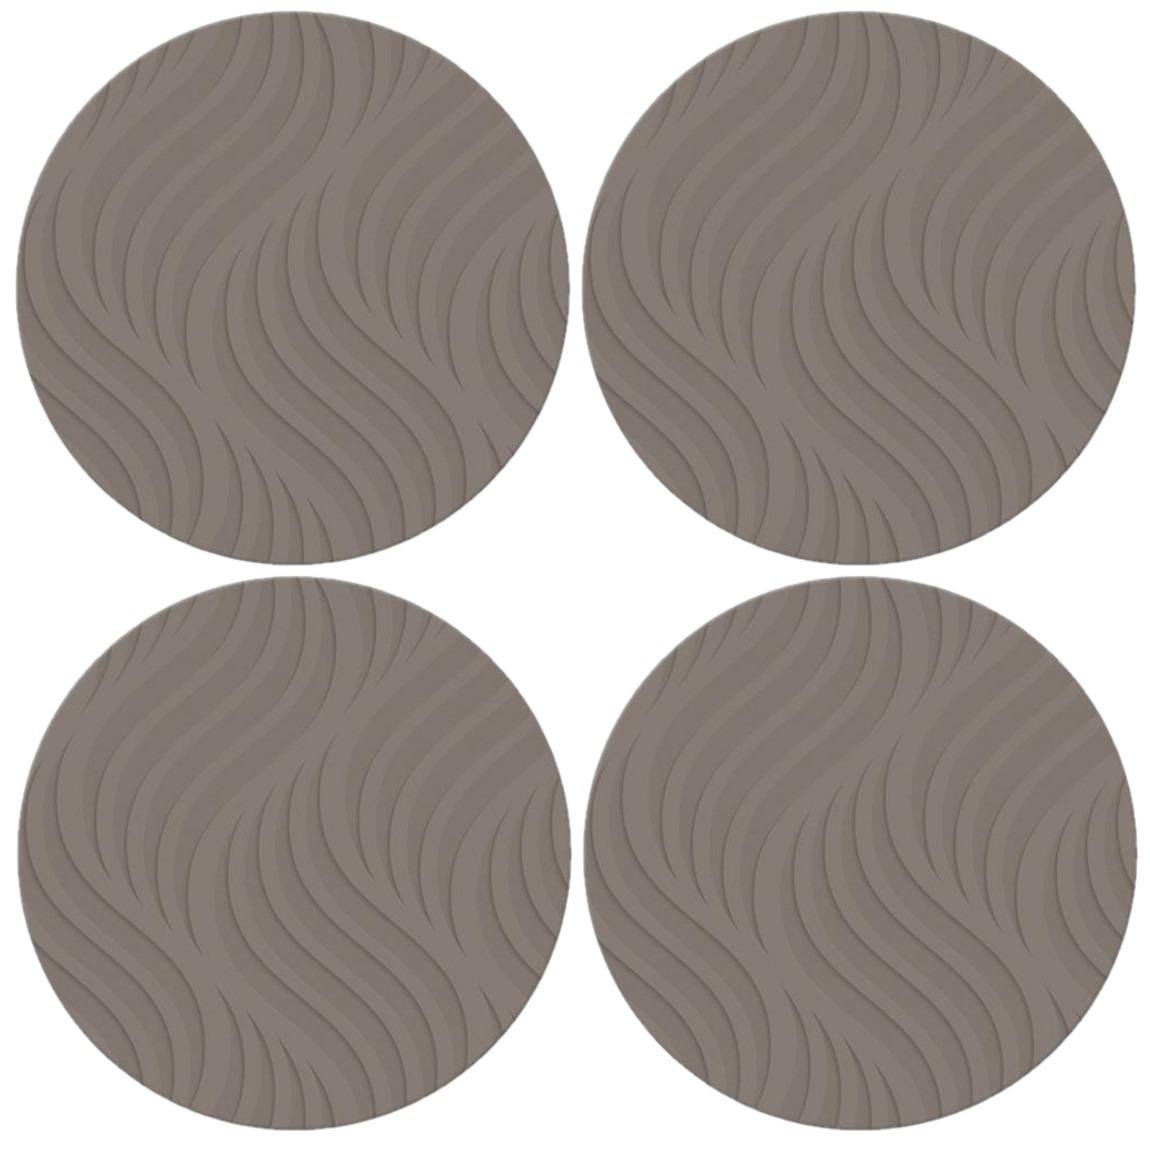 6x stuks ronde placemats taupe met wave patroon 37 cm -